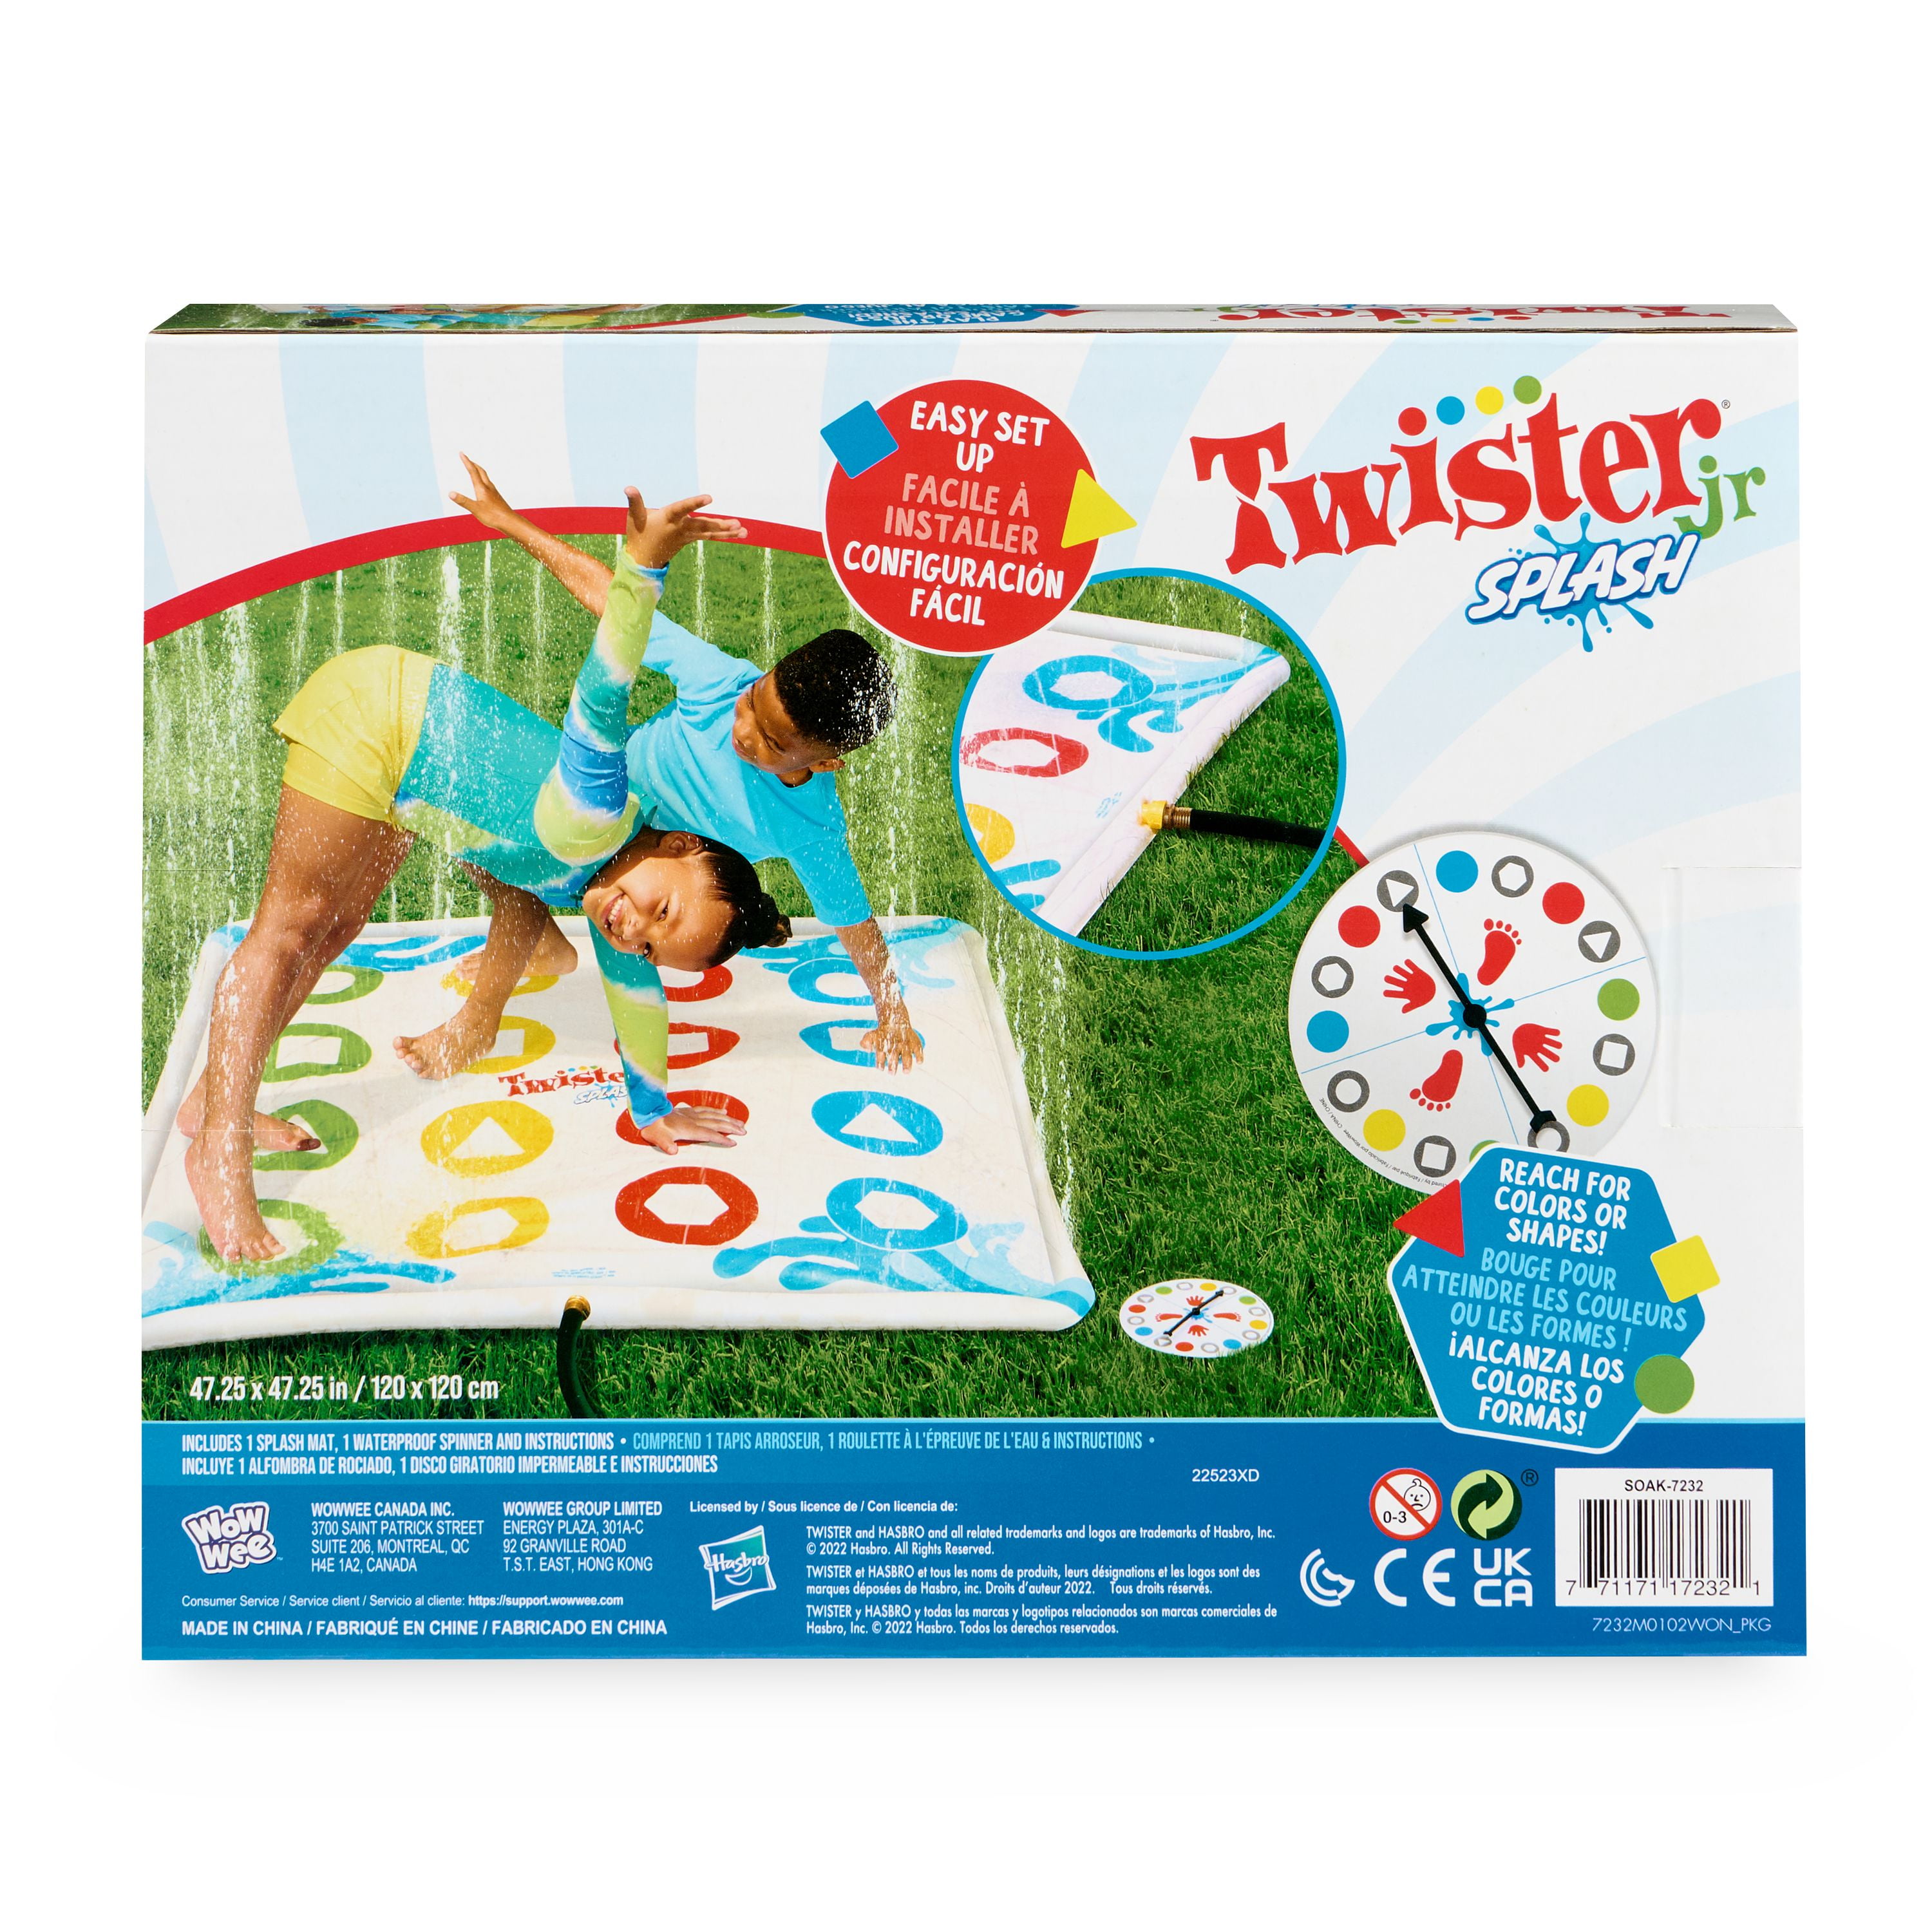 Hasbro Twister Jr Splash Game by WowWee 